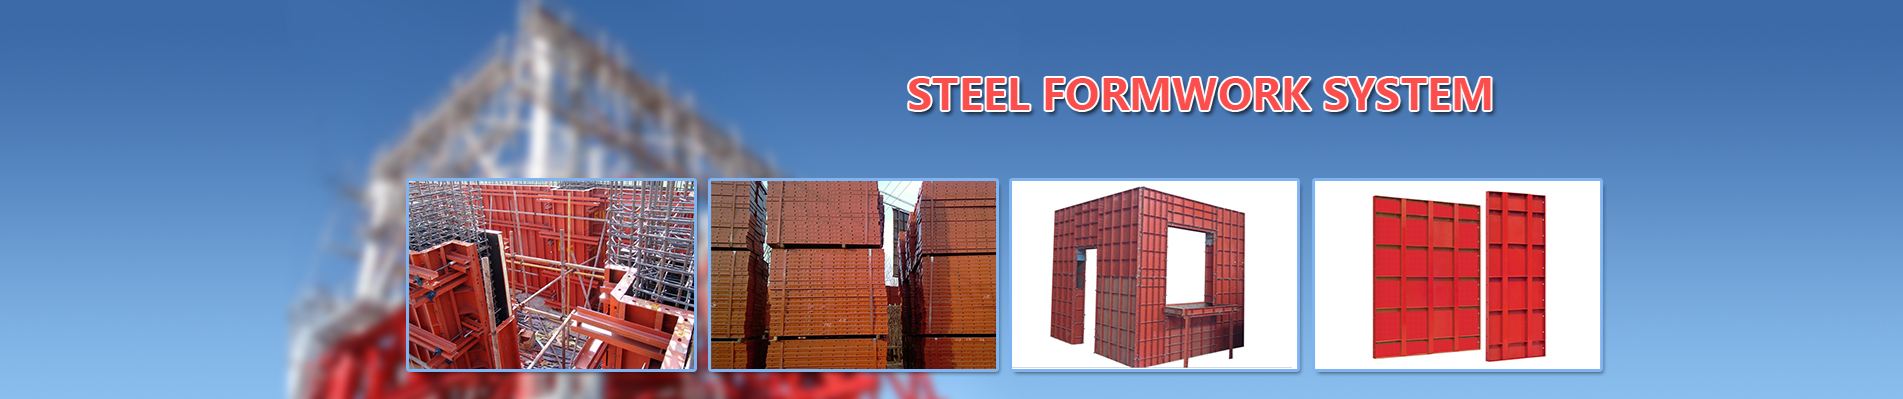 steel-formwork